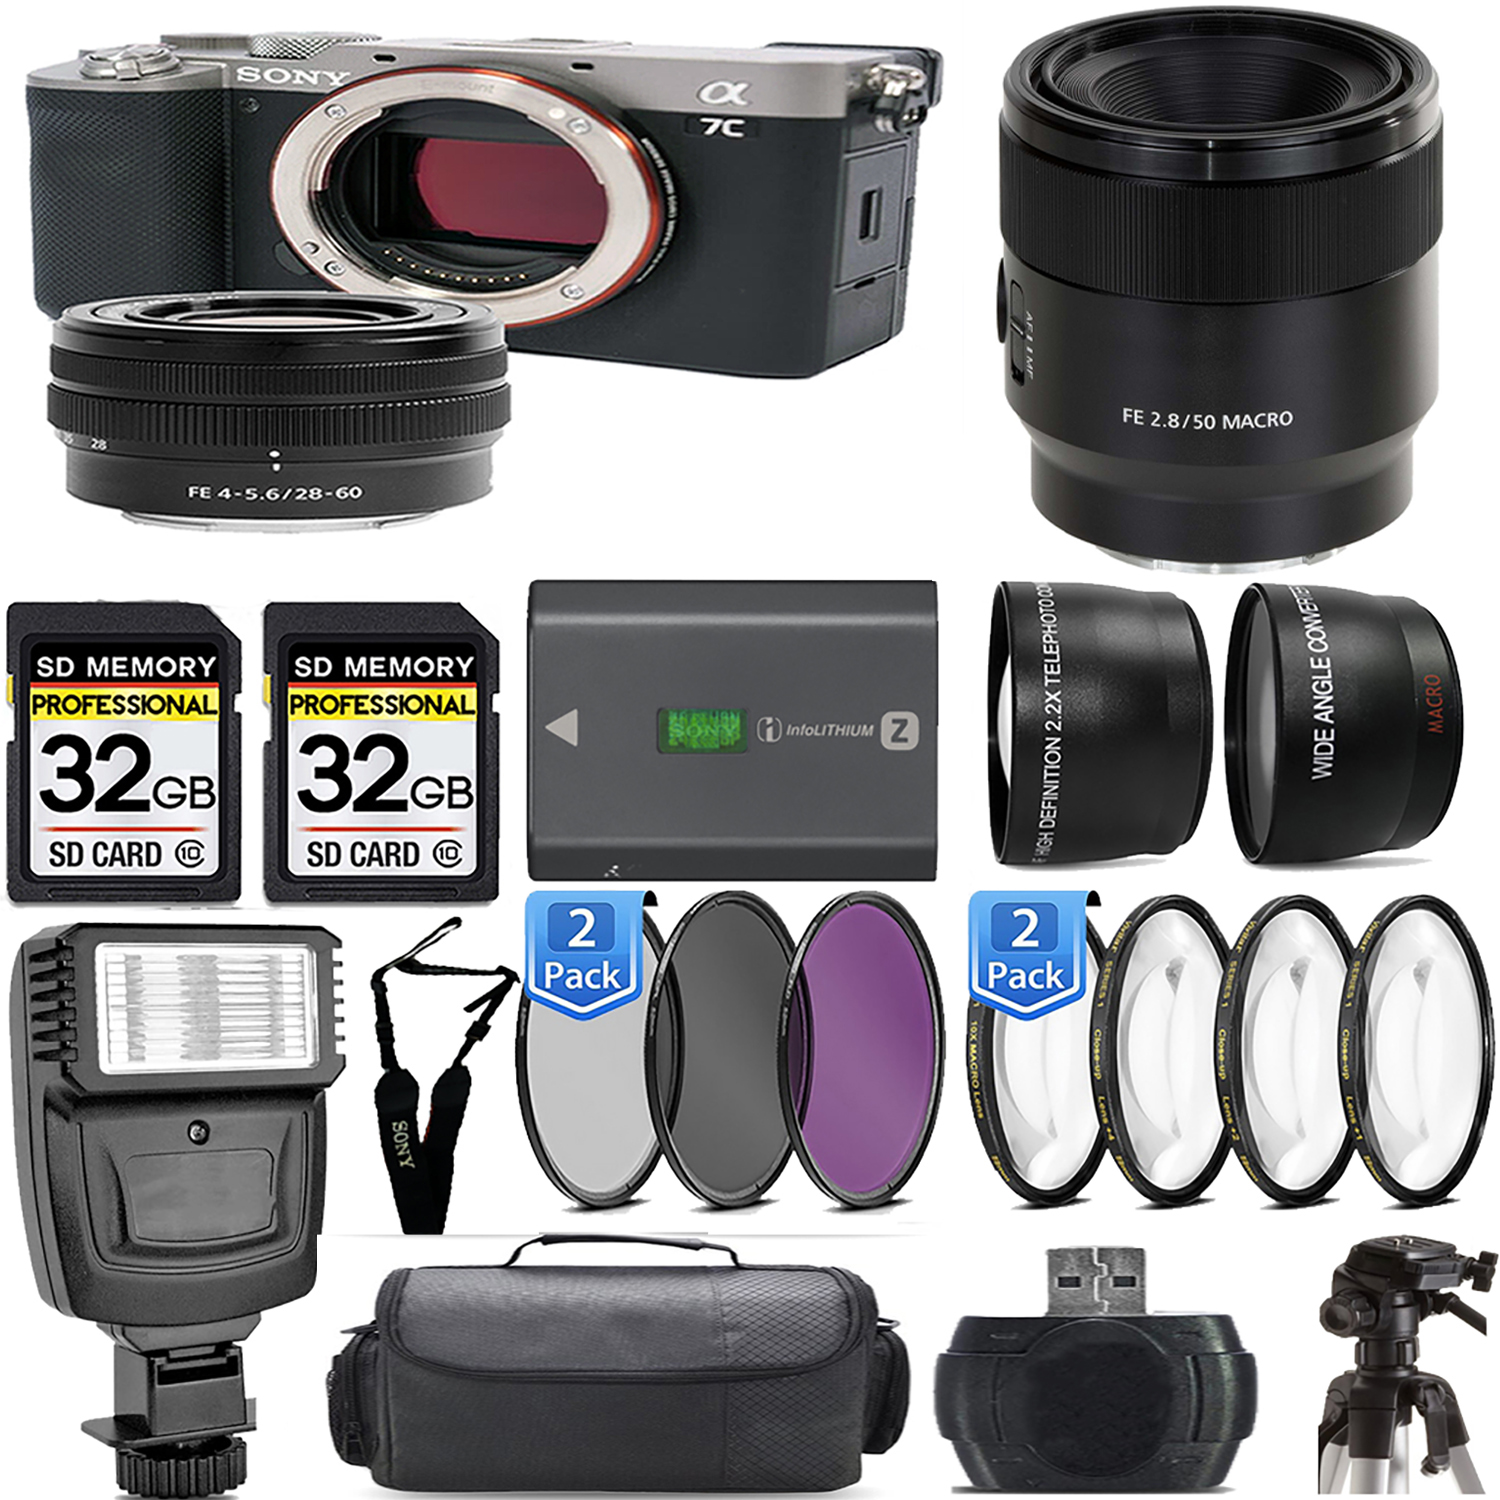 Alpha a7C Camera (Silver) + 28-60mm Lens + 50mm f/2.8 Macro Lens + Flash - Kit *FREE SHIPPING*